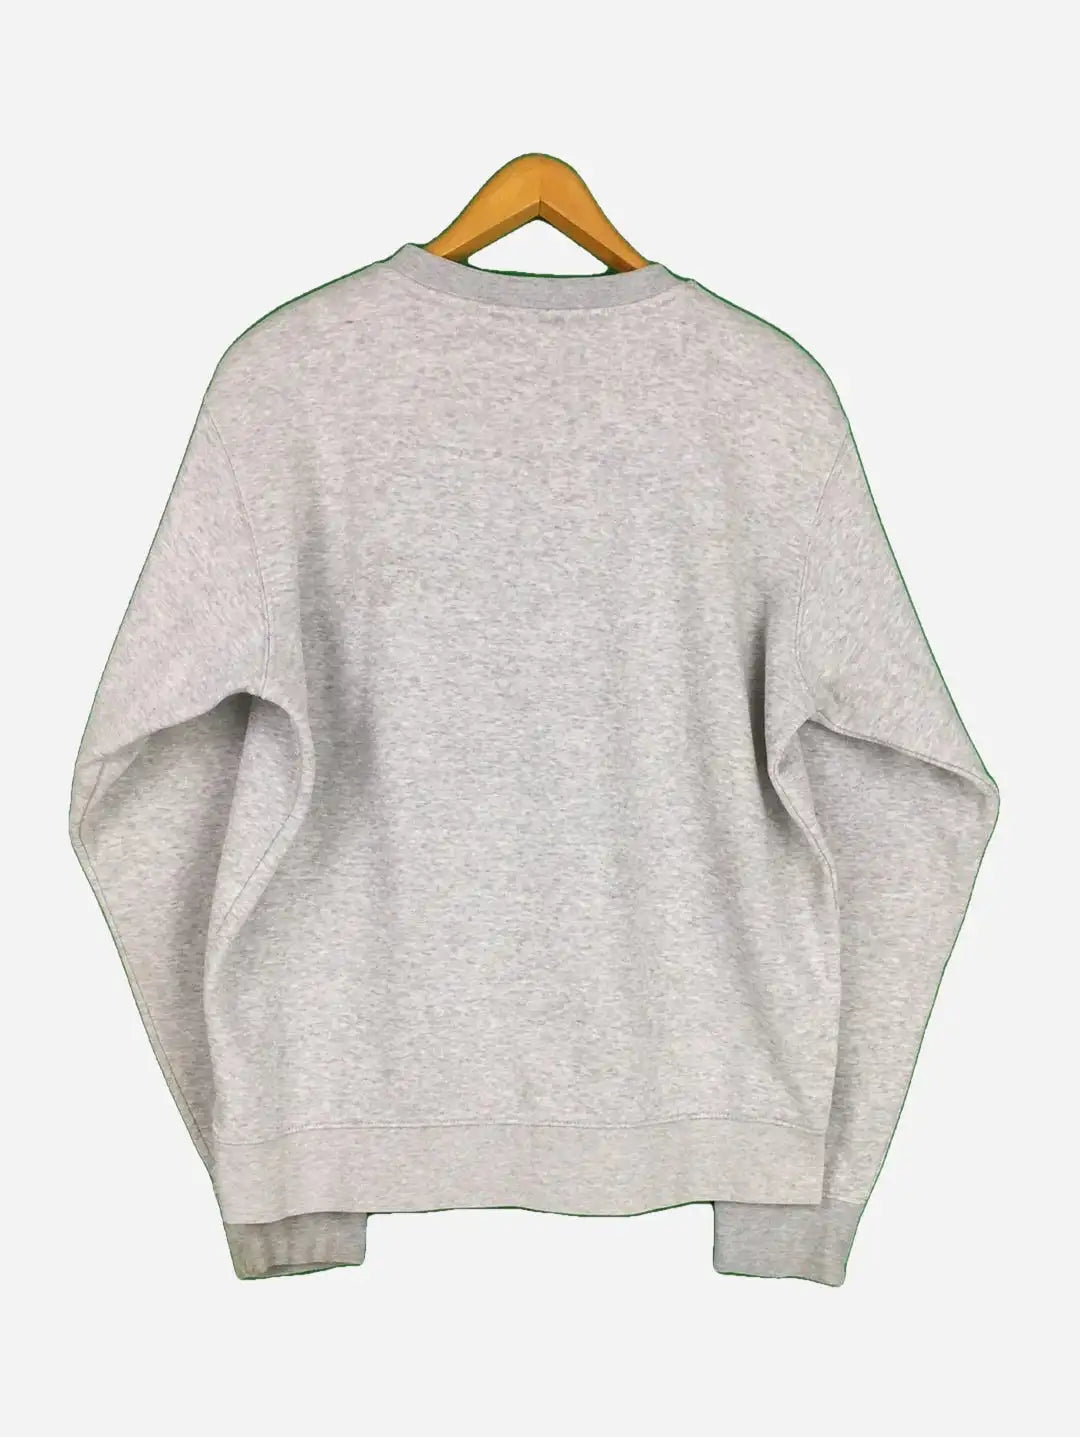 Fila Sweater (S)